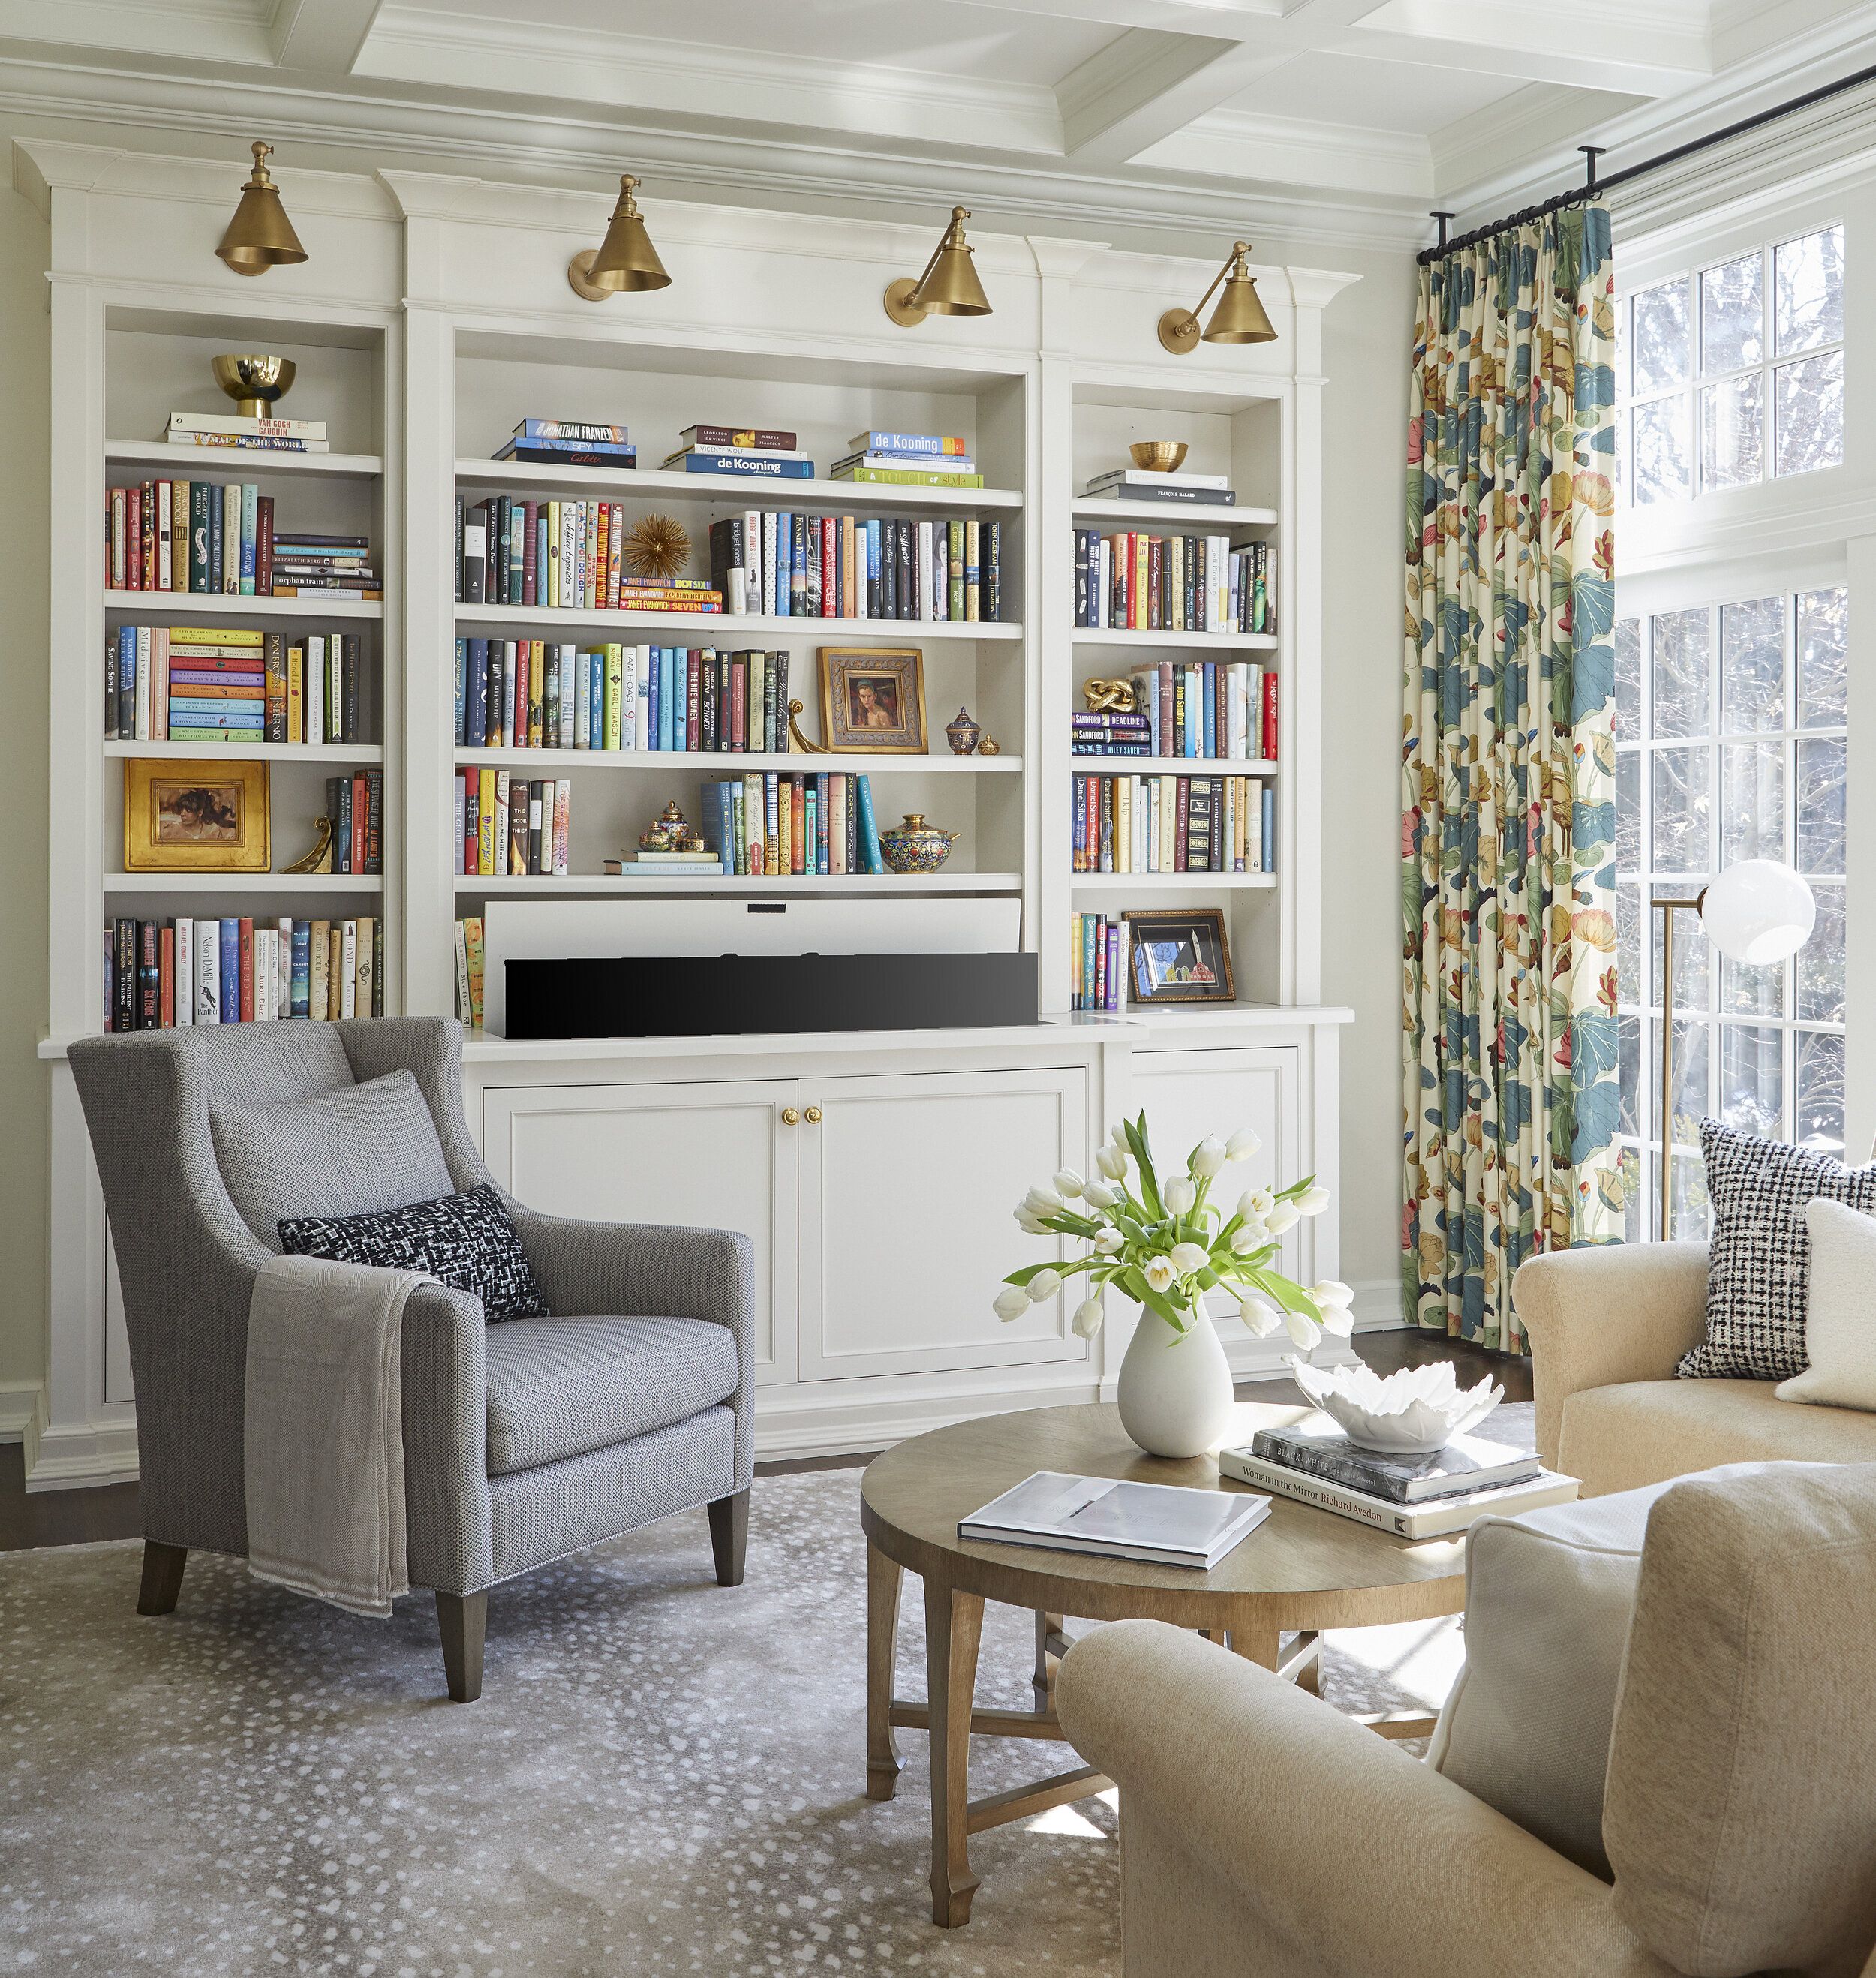 How To Organize Your Bookshelves, According To Interior Designers